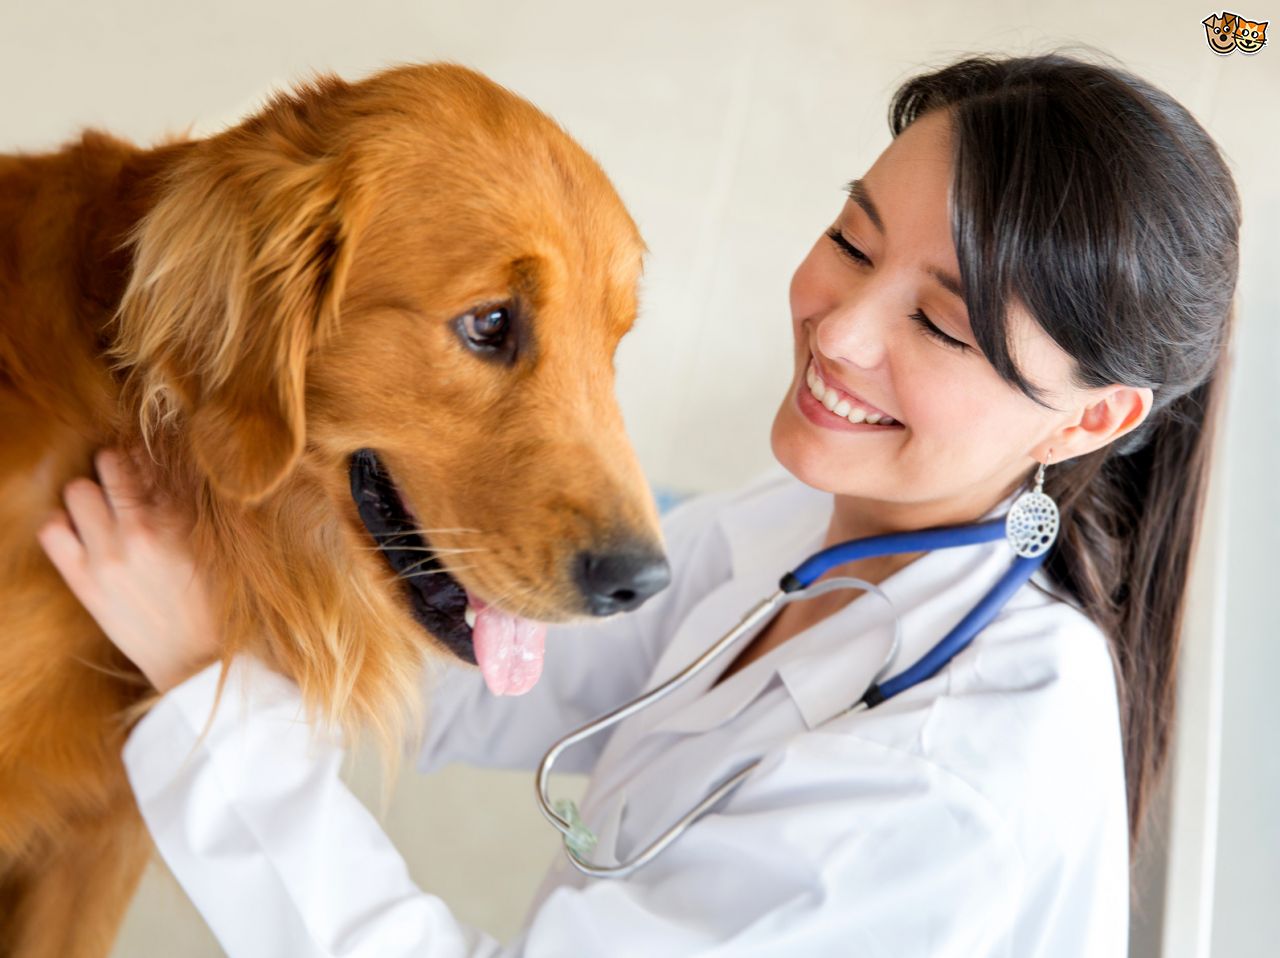 veterinarian examining a dog